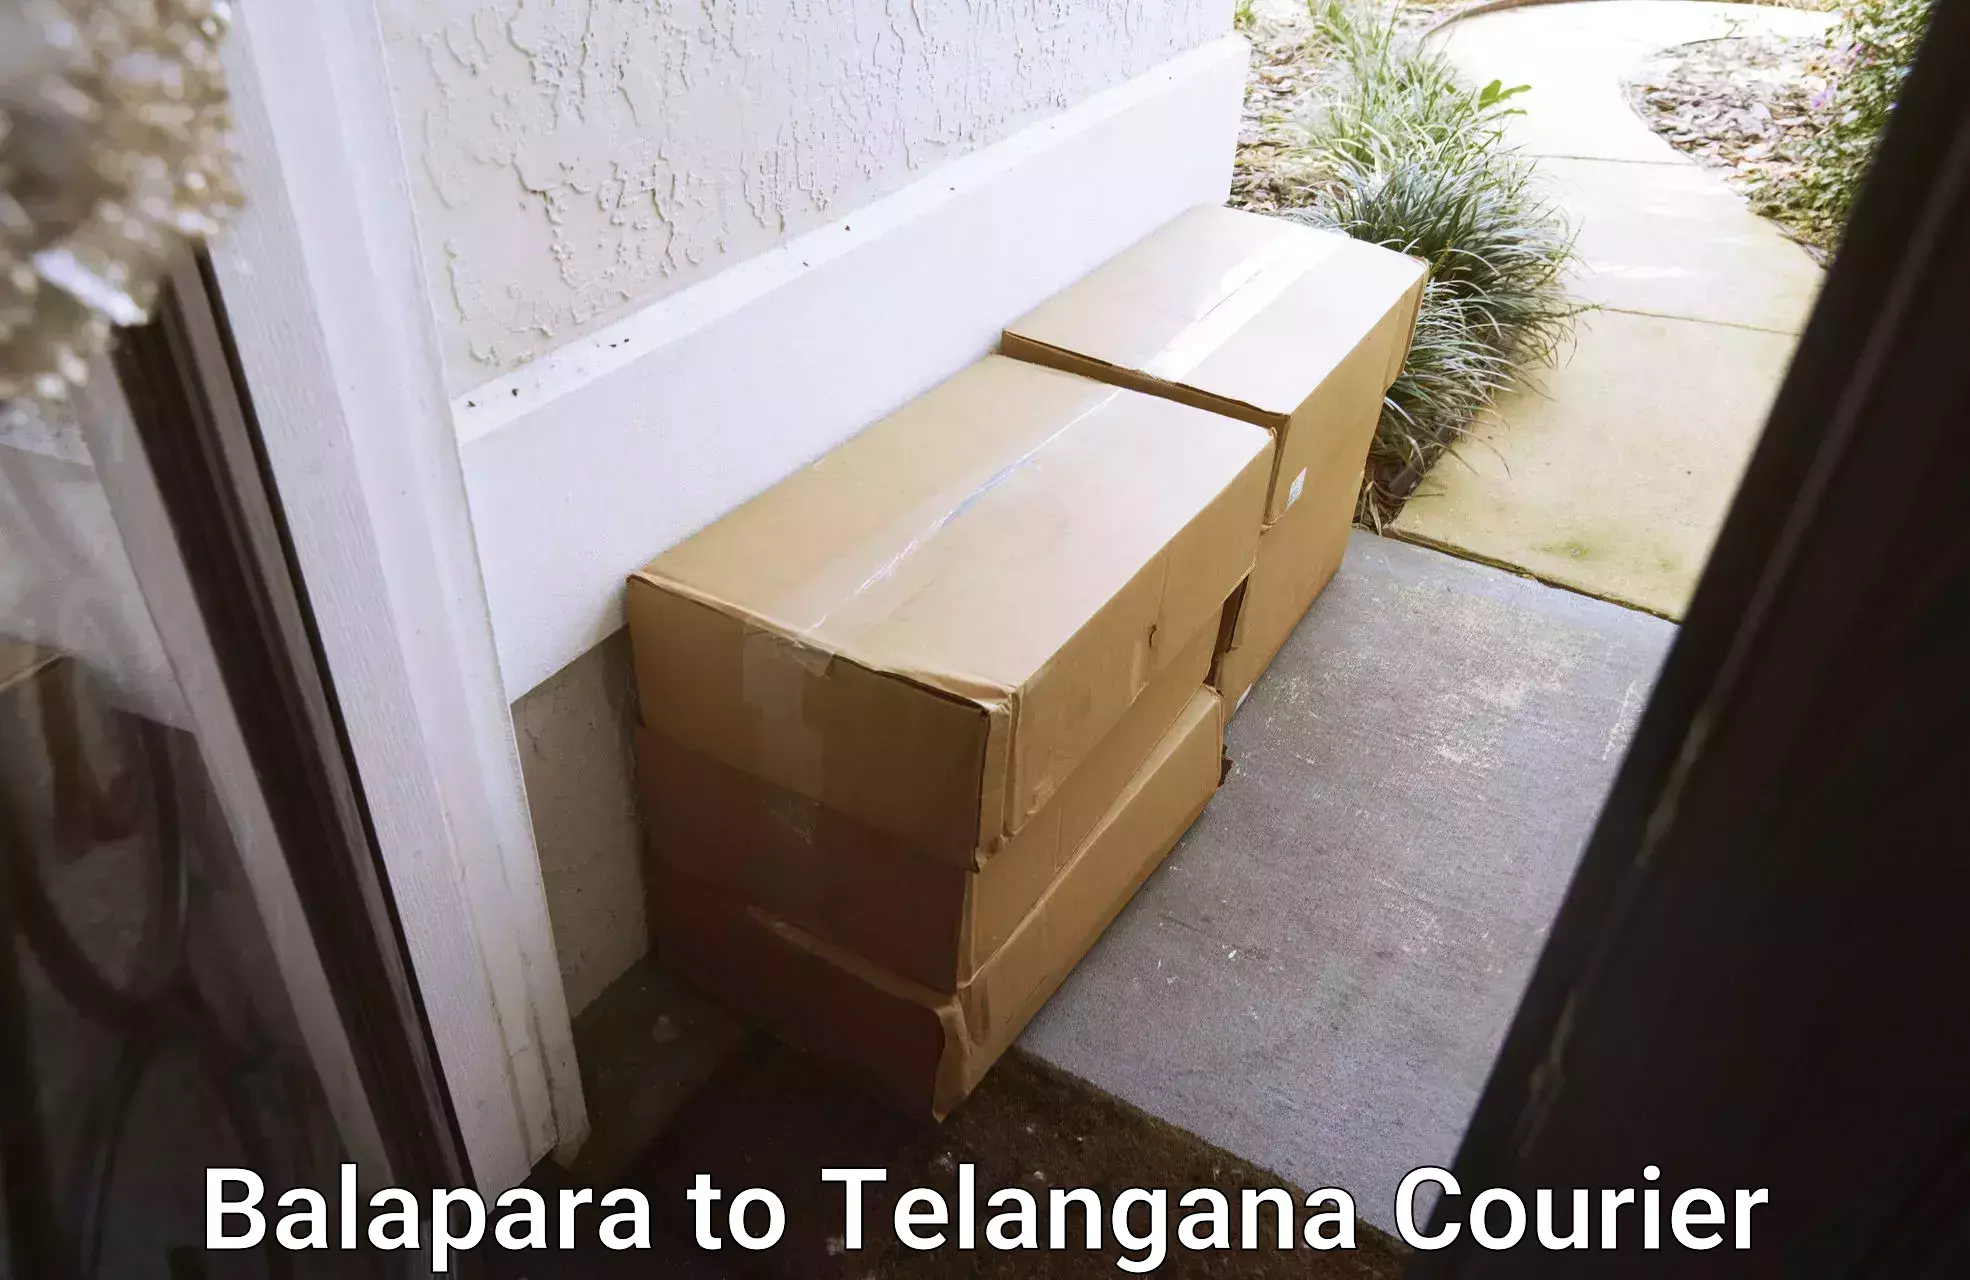 Courier service efficiency Balapara to Jadcherla